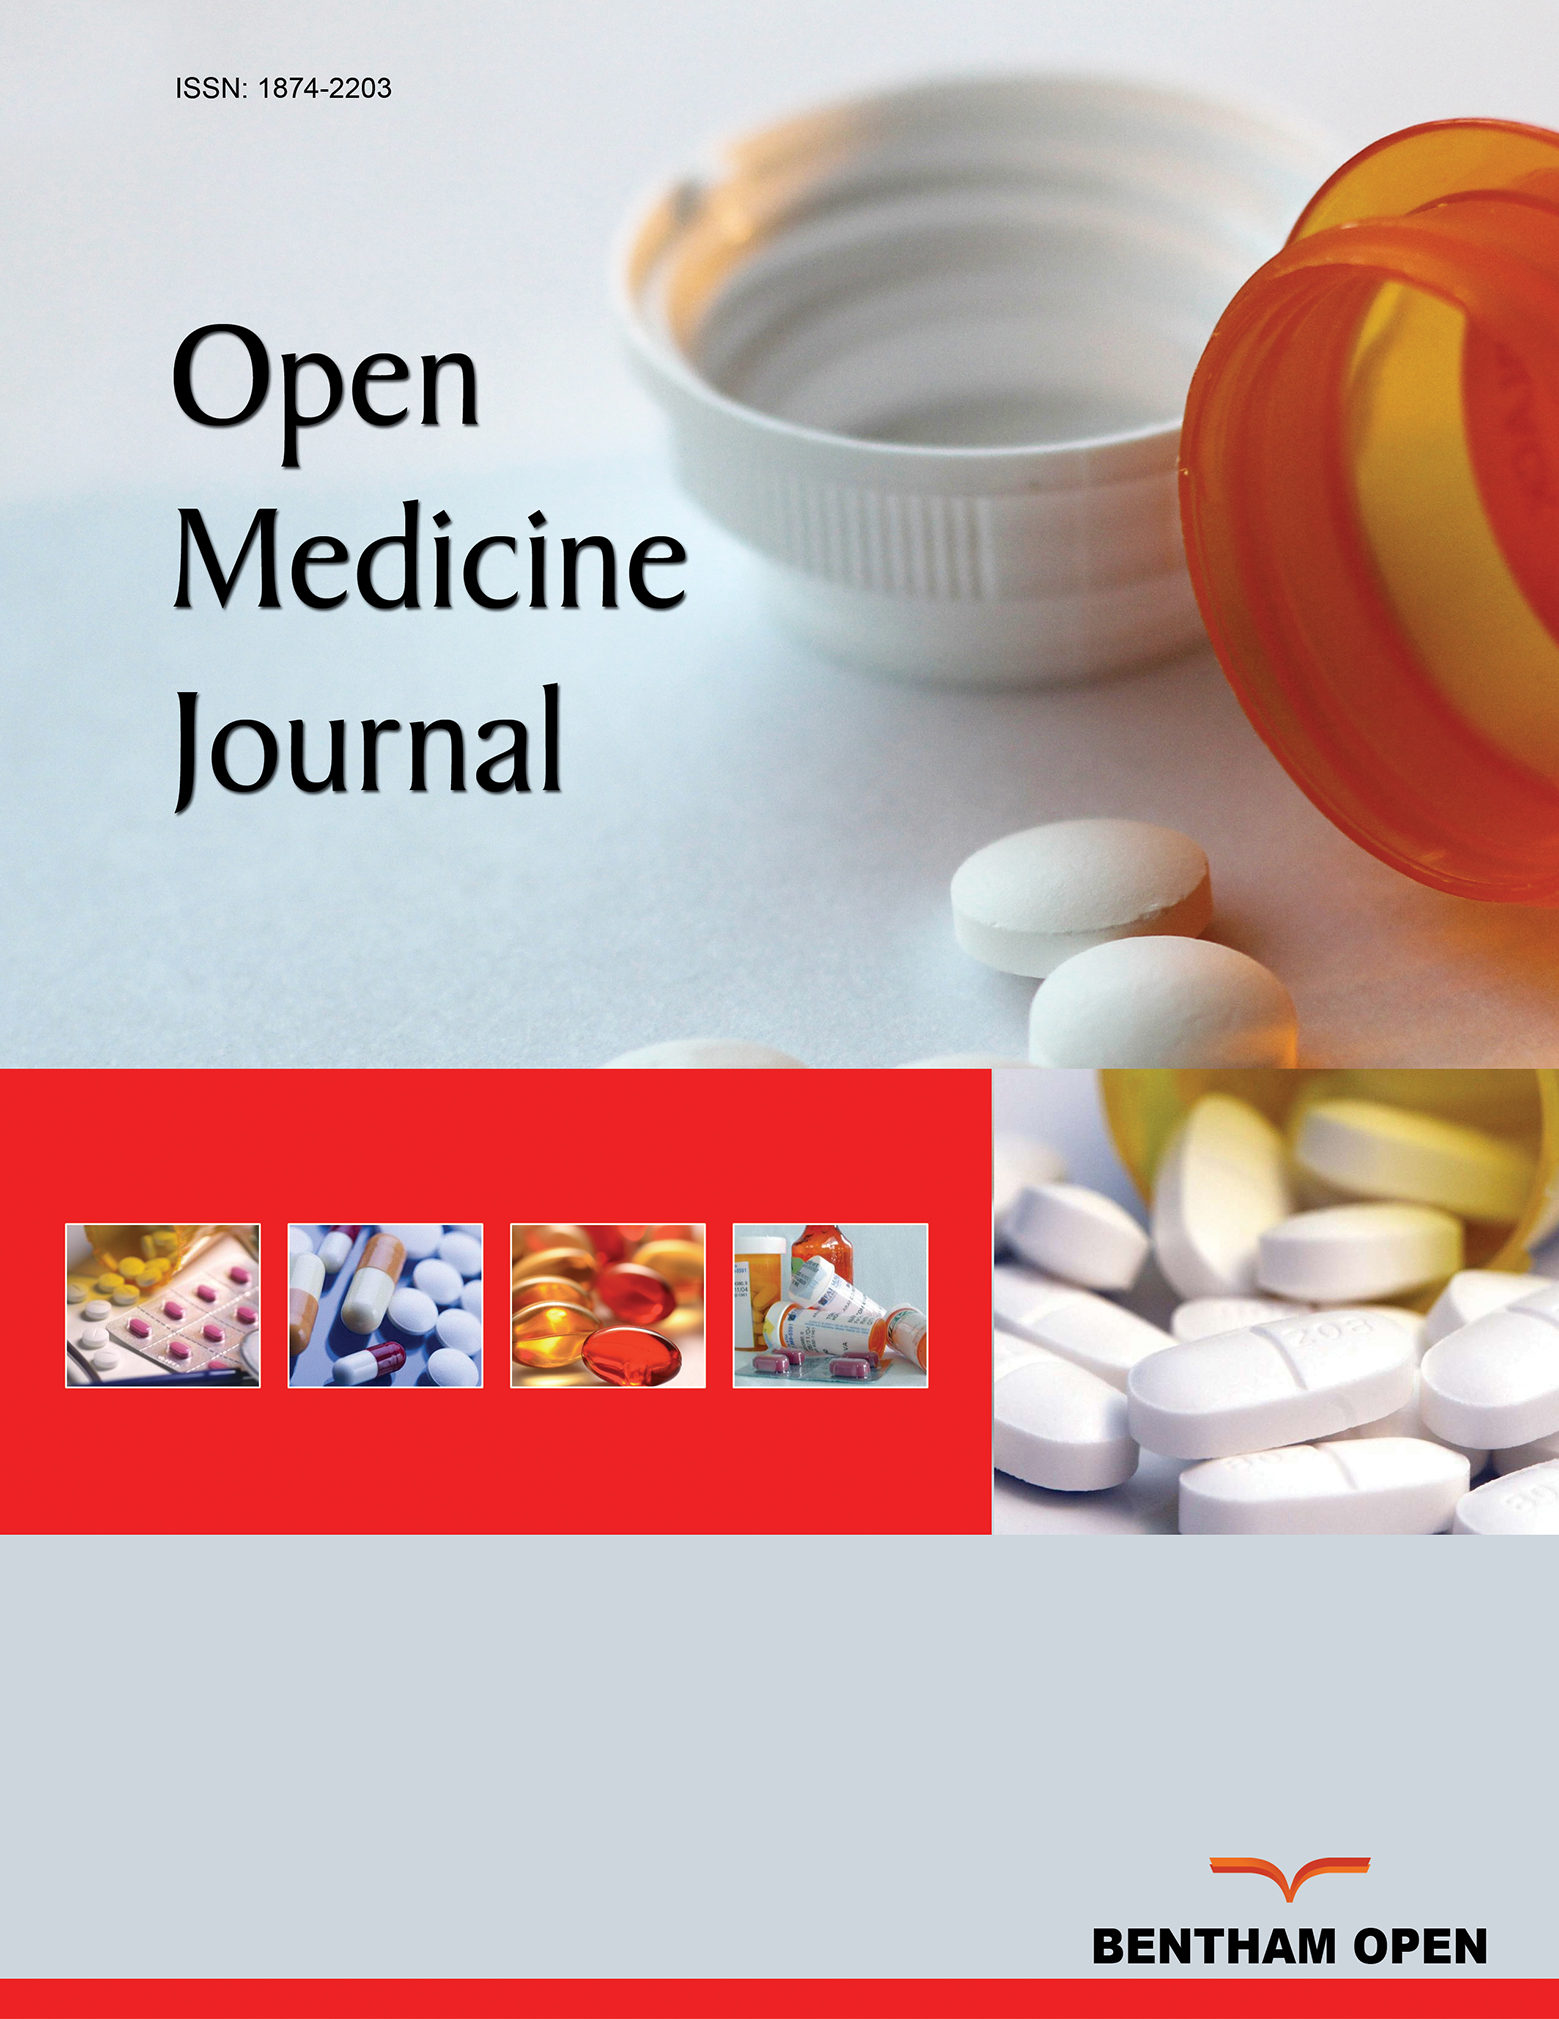 The Open Medicine Journal